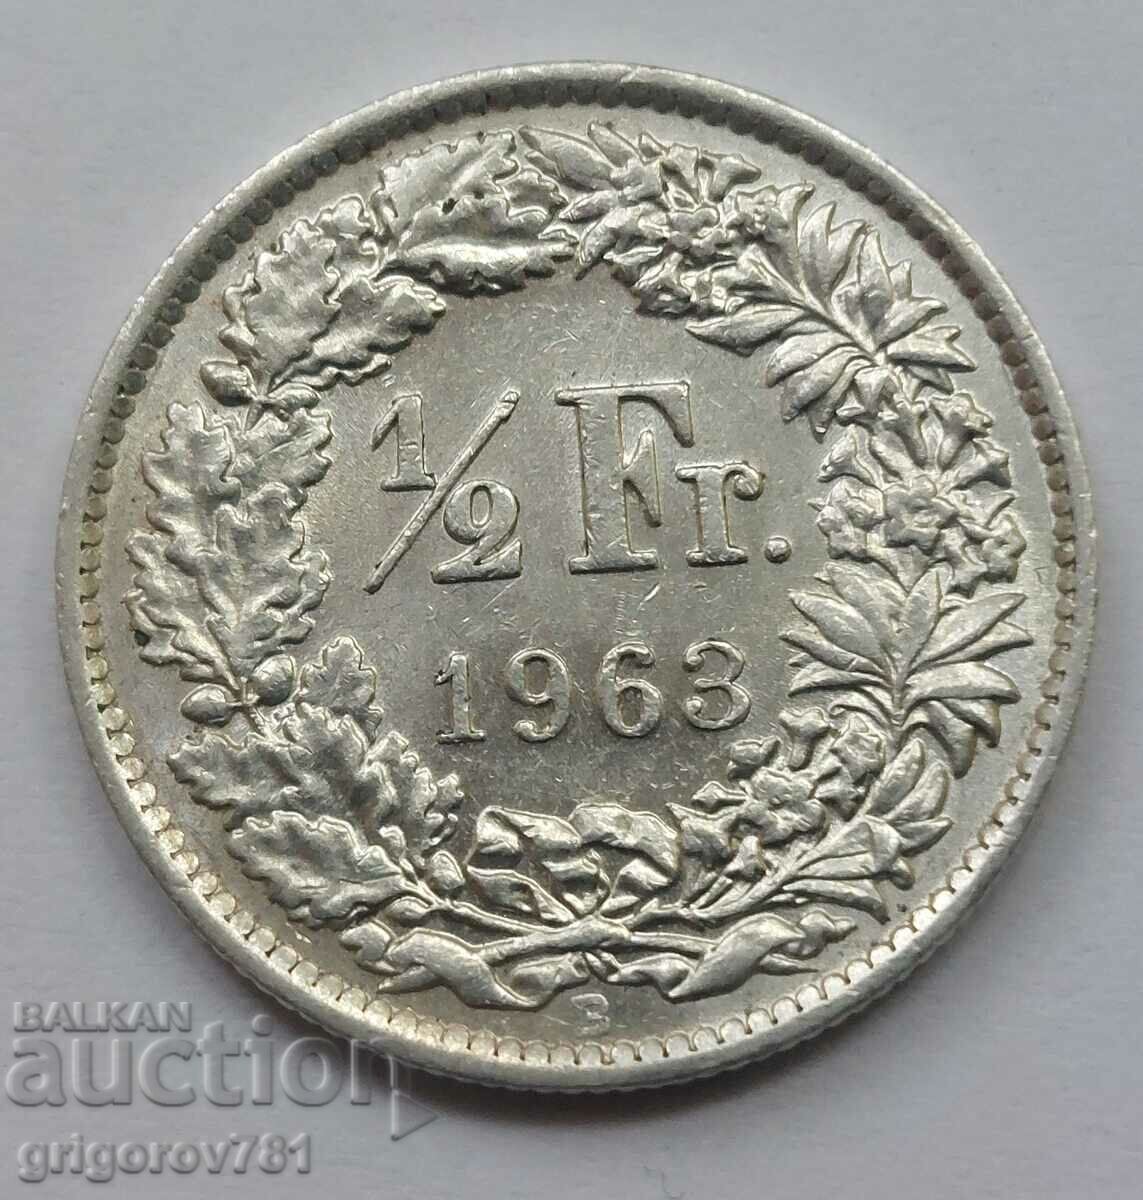 1/2 Franc Silver Switzerland 1963 B - Silver Coin #123